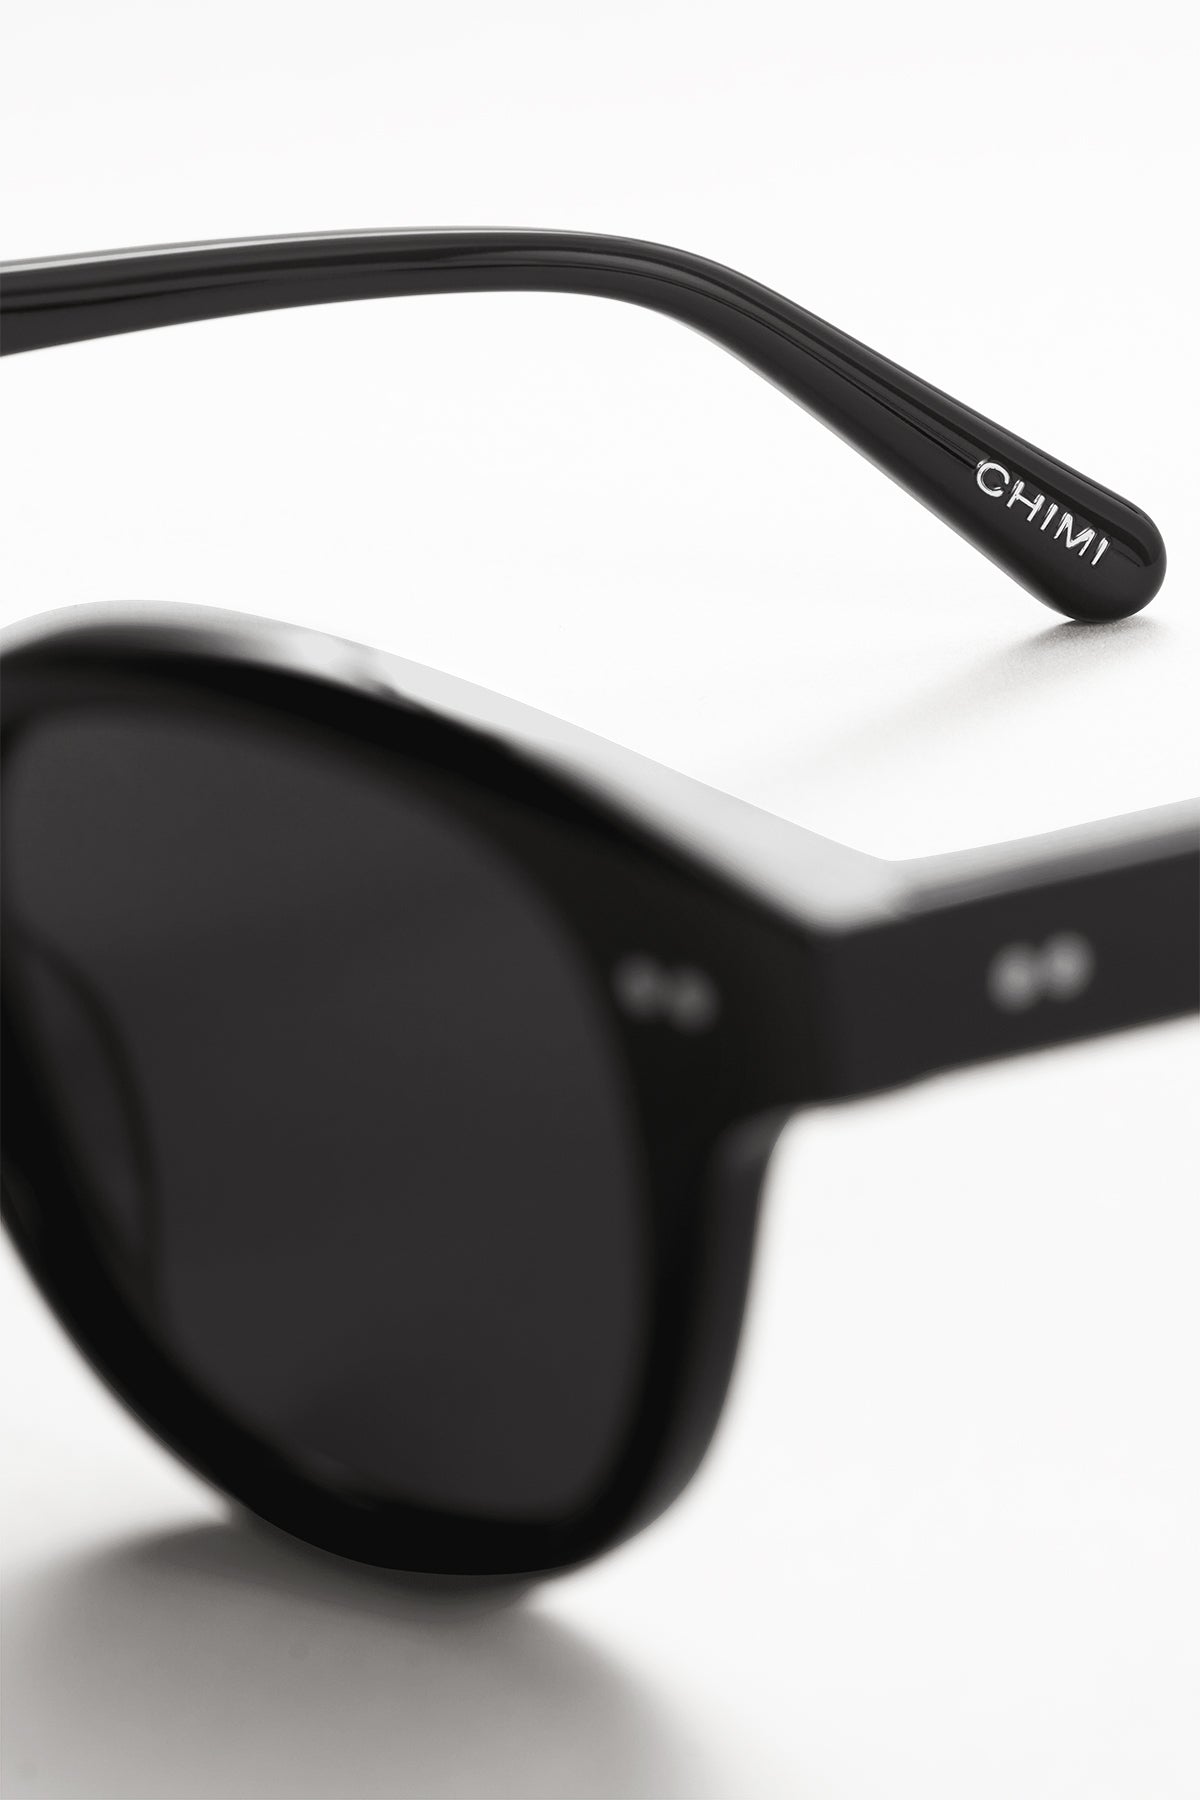 Chimi 01 Sunglasses Black Detail-22132427161793